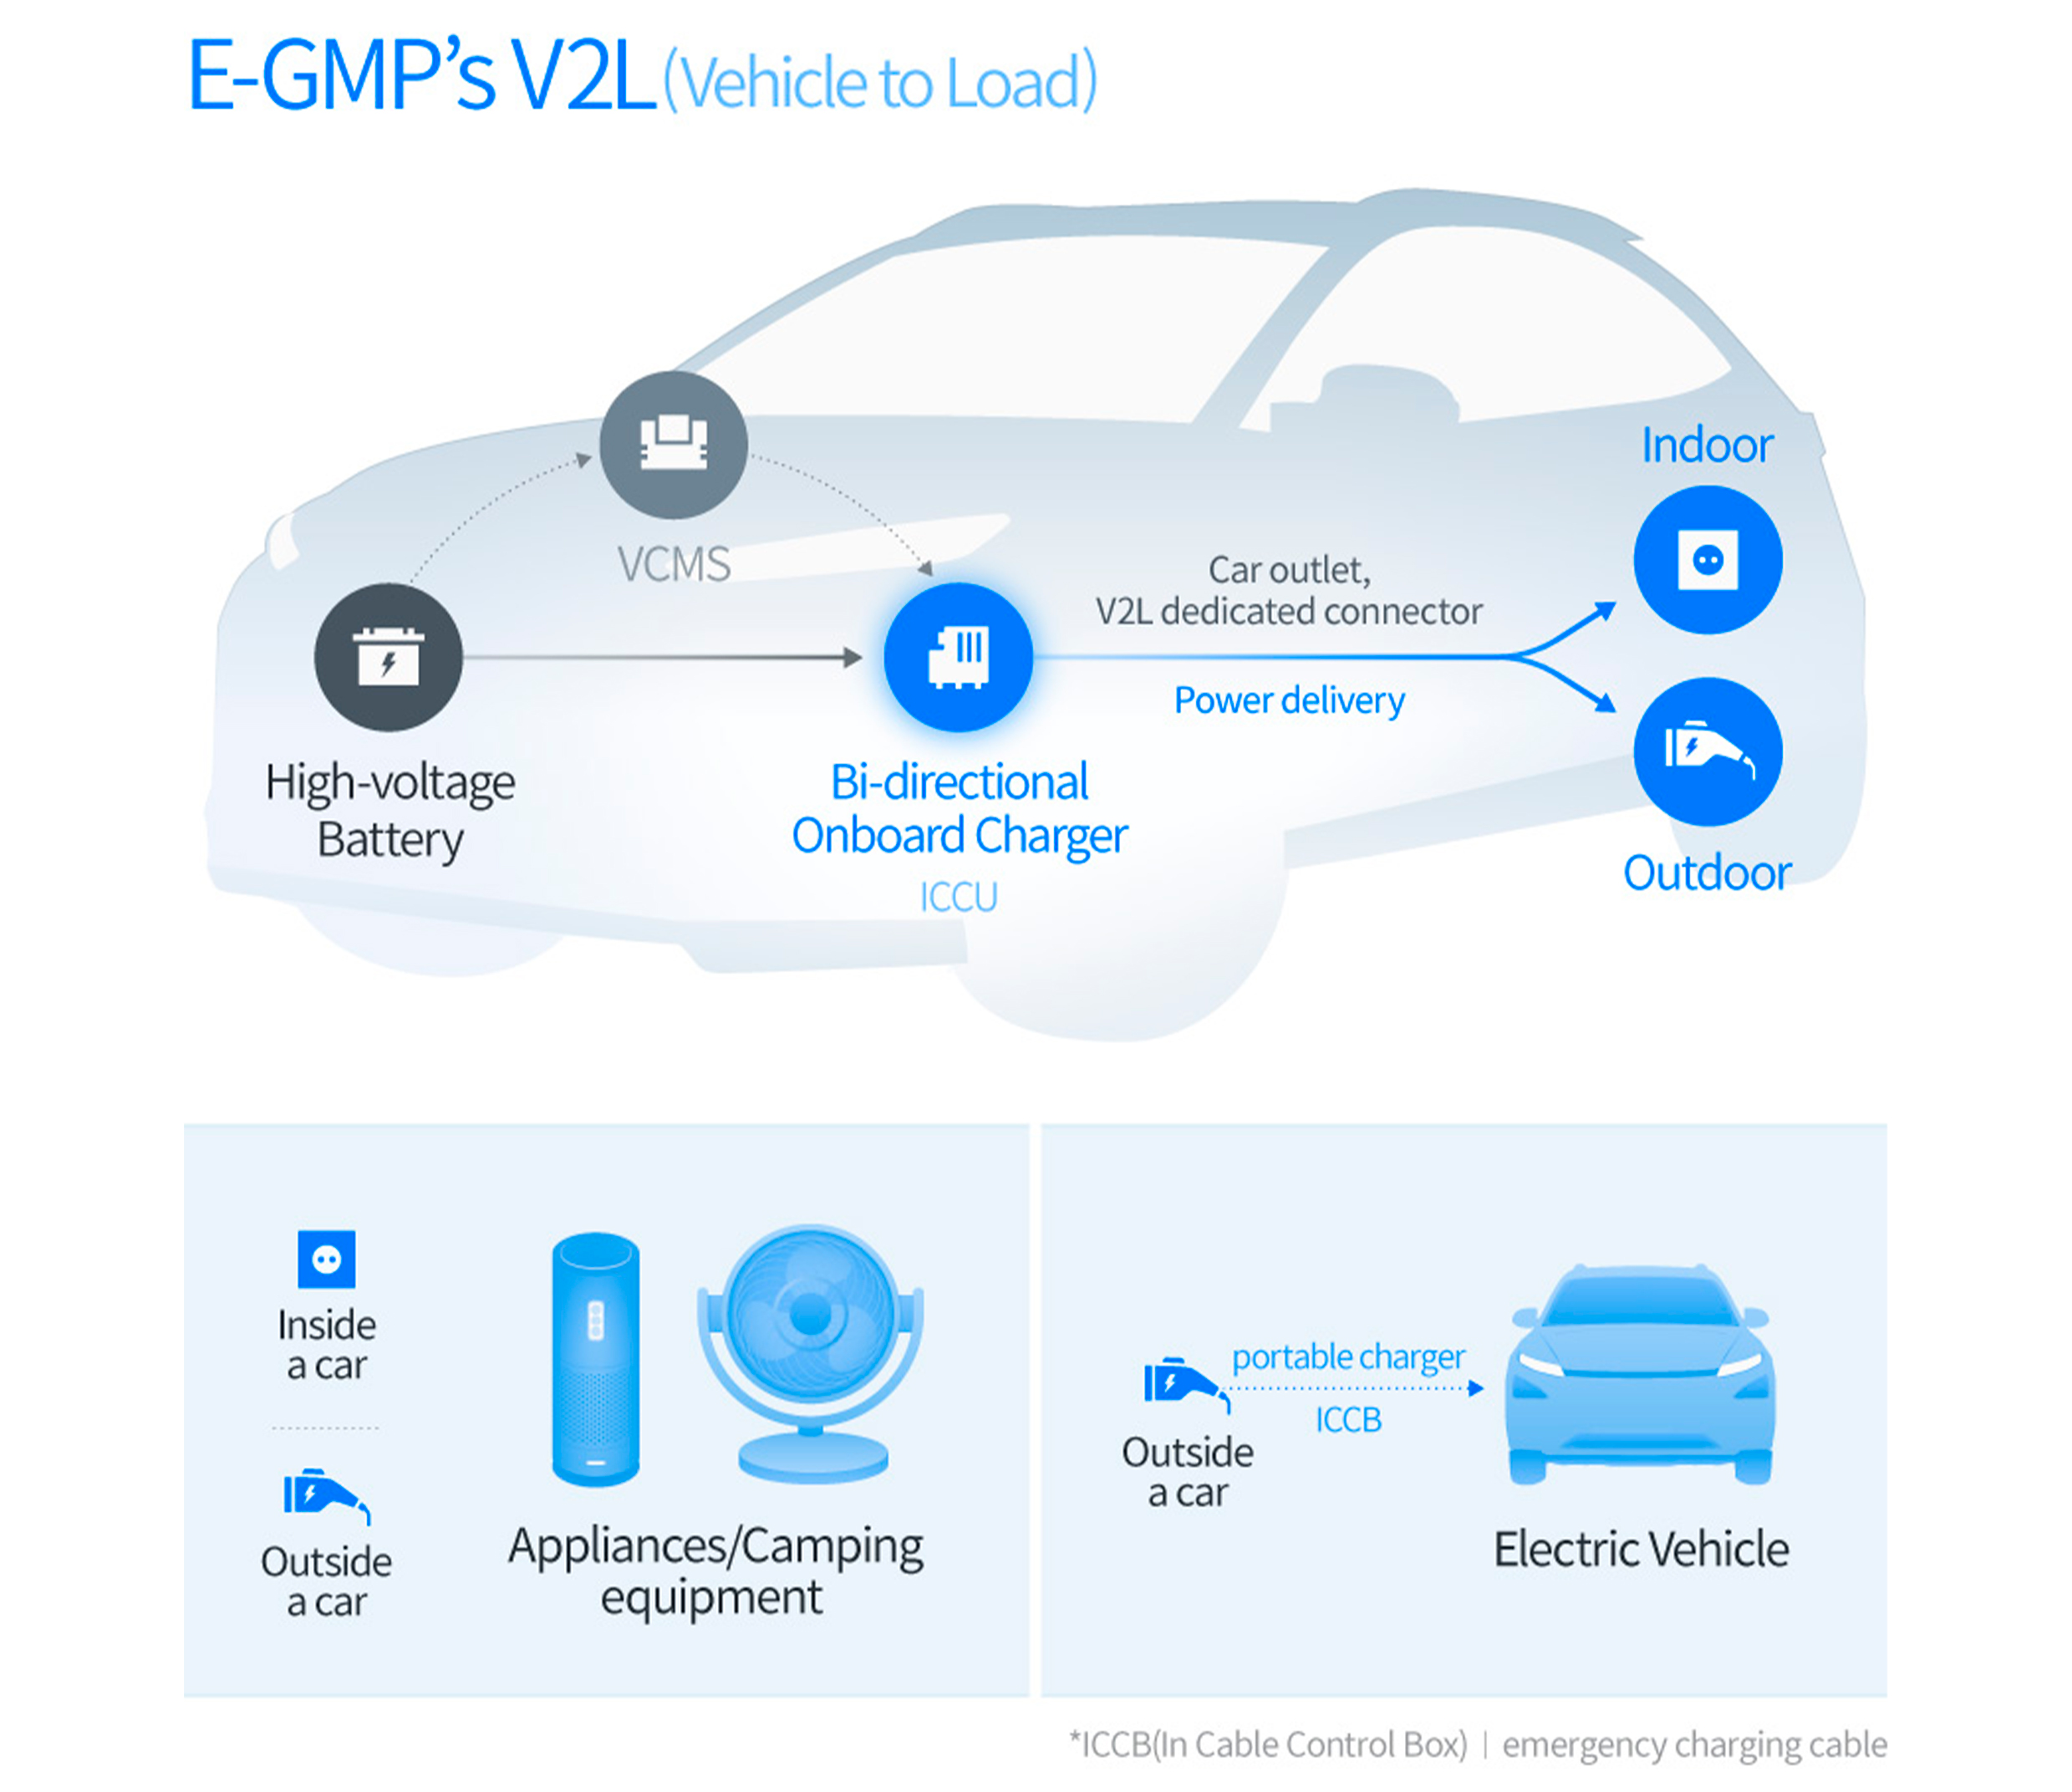 Infographic explaining E-GMP's V2L technology